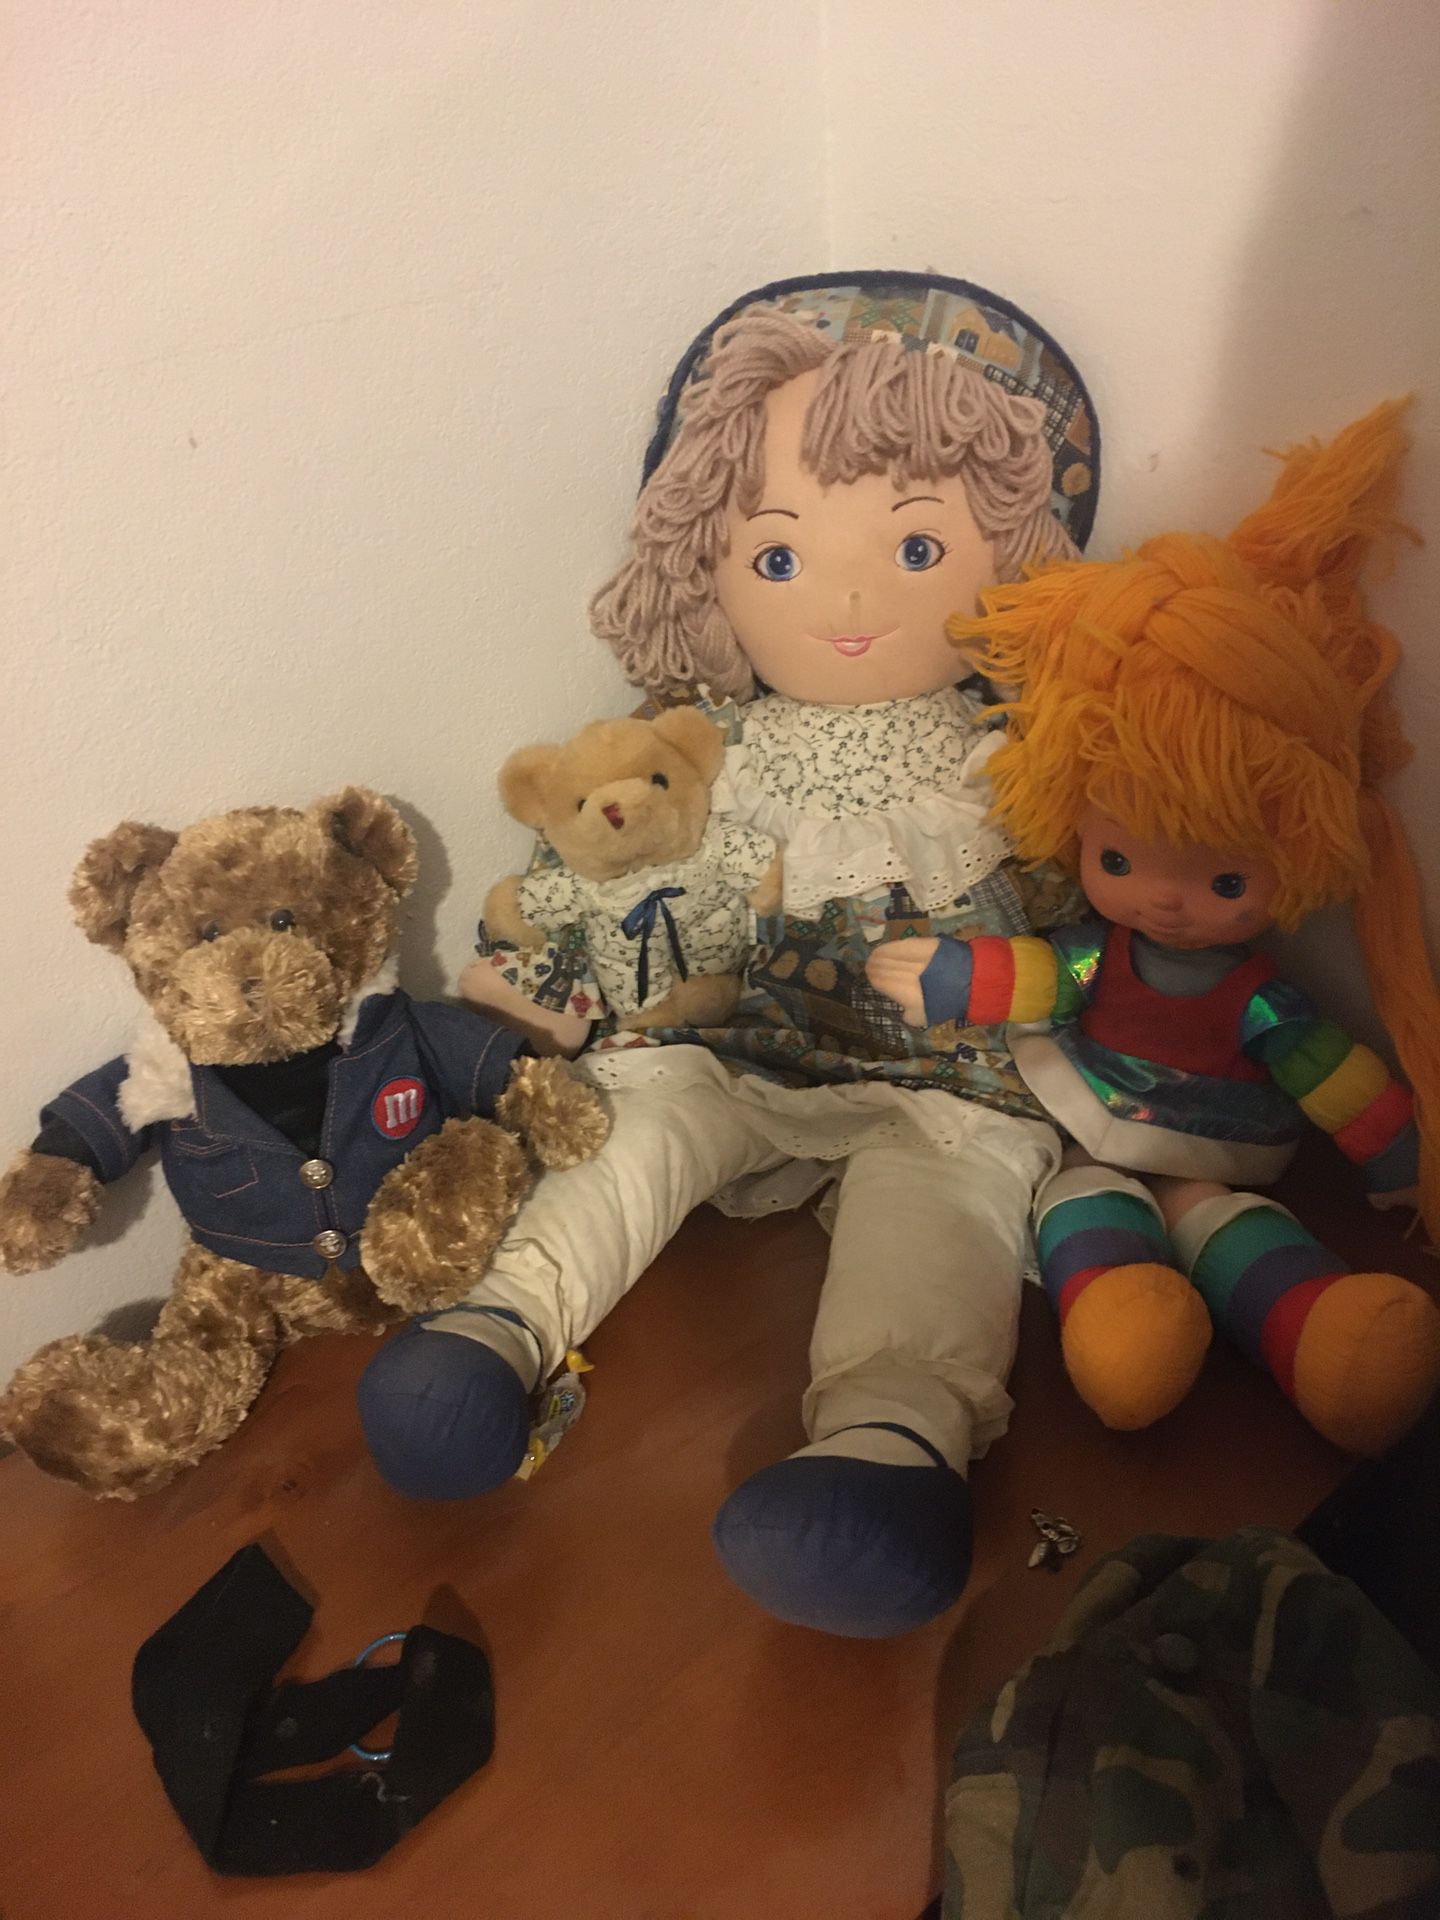 Stuffed animals/doll